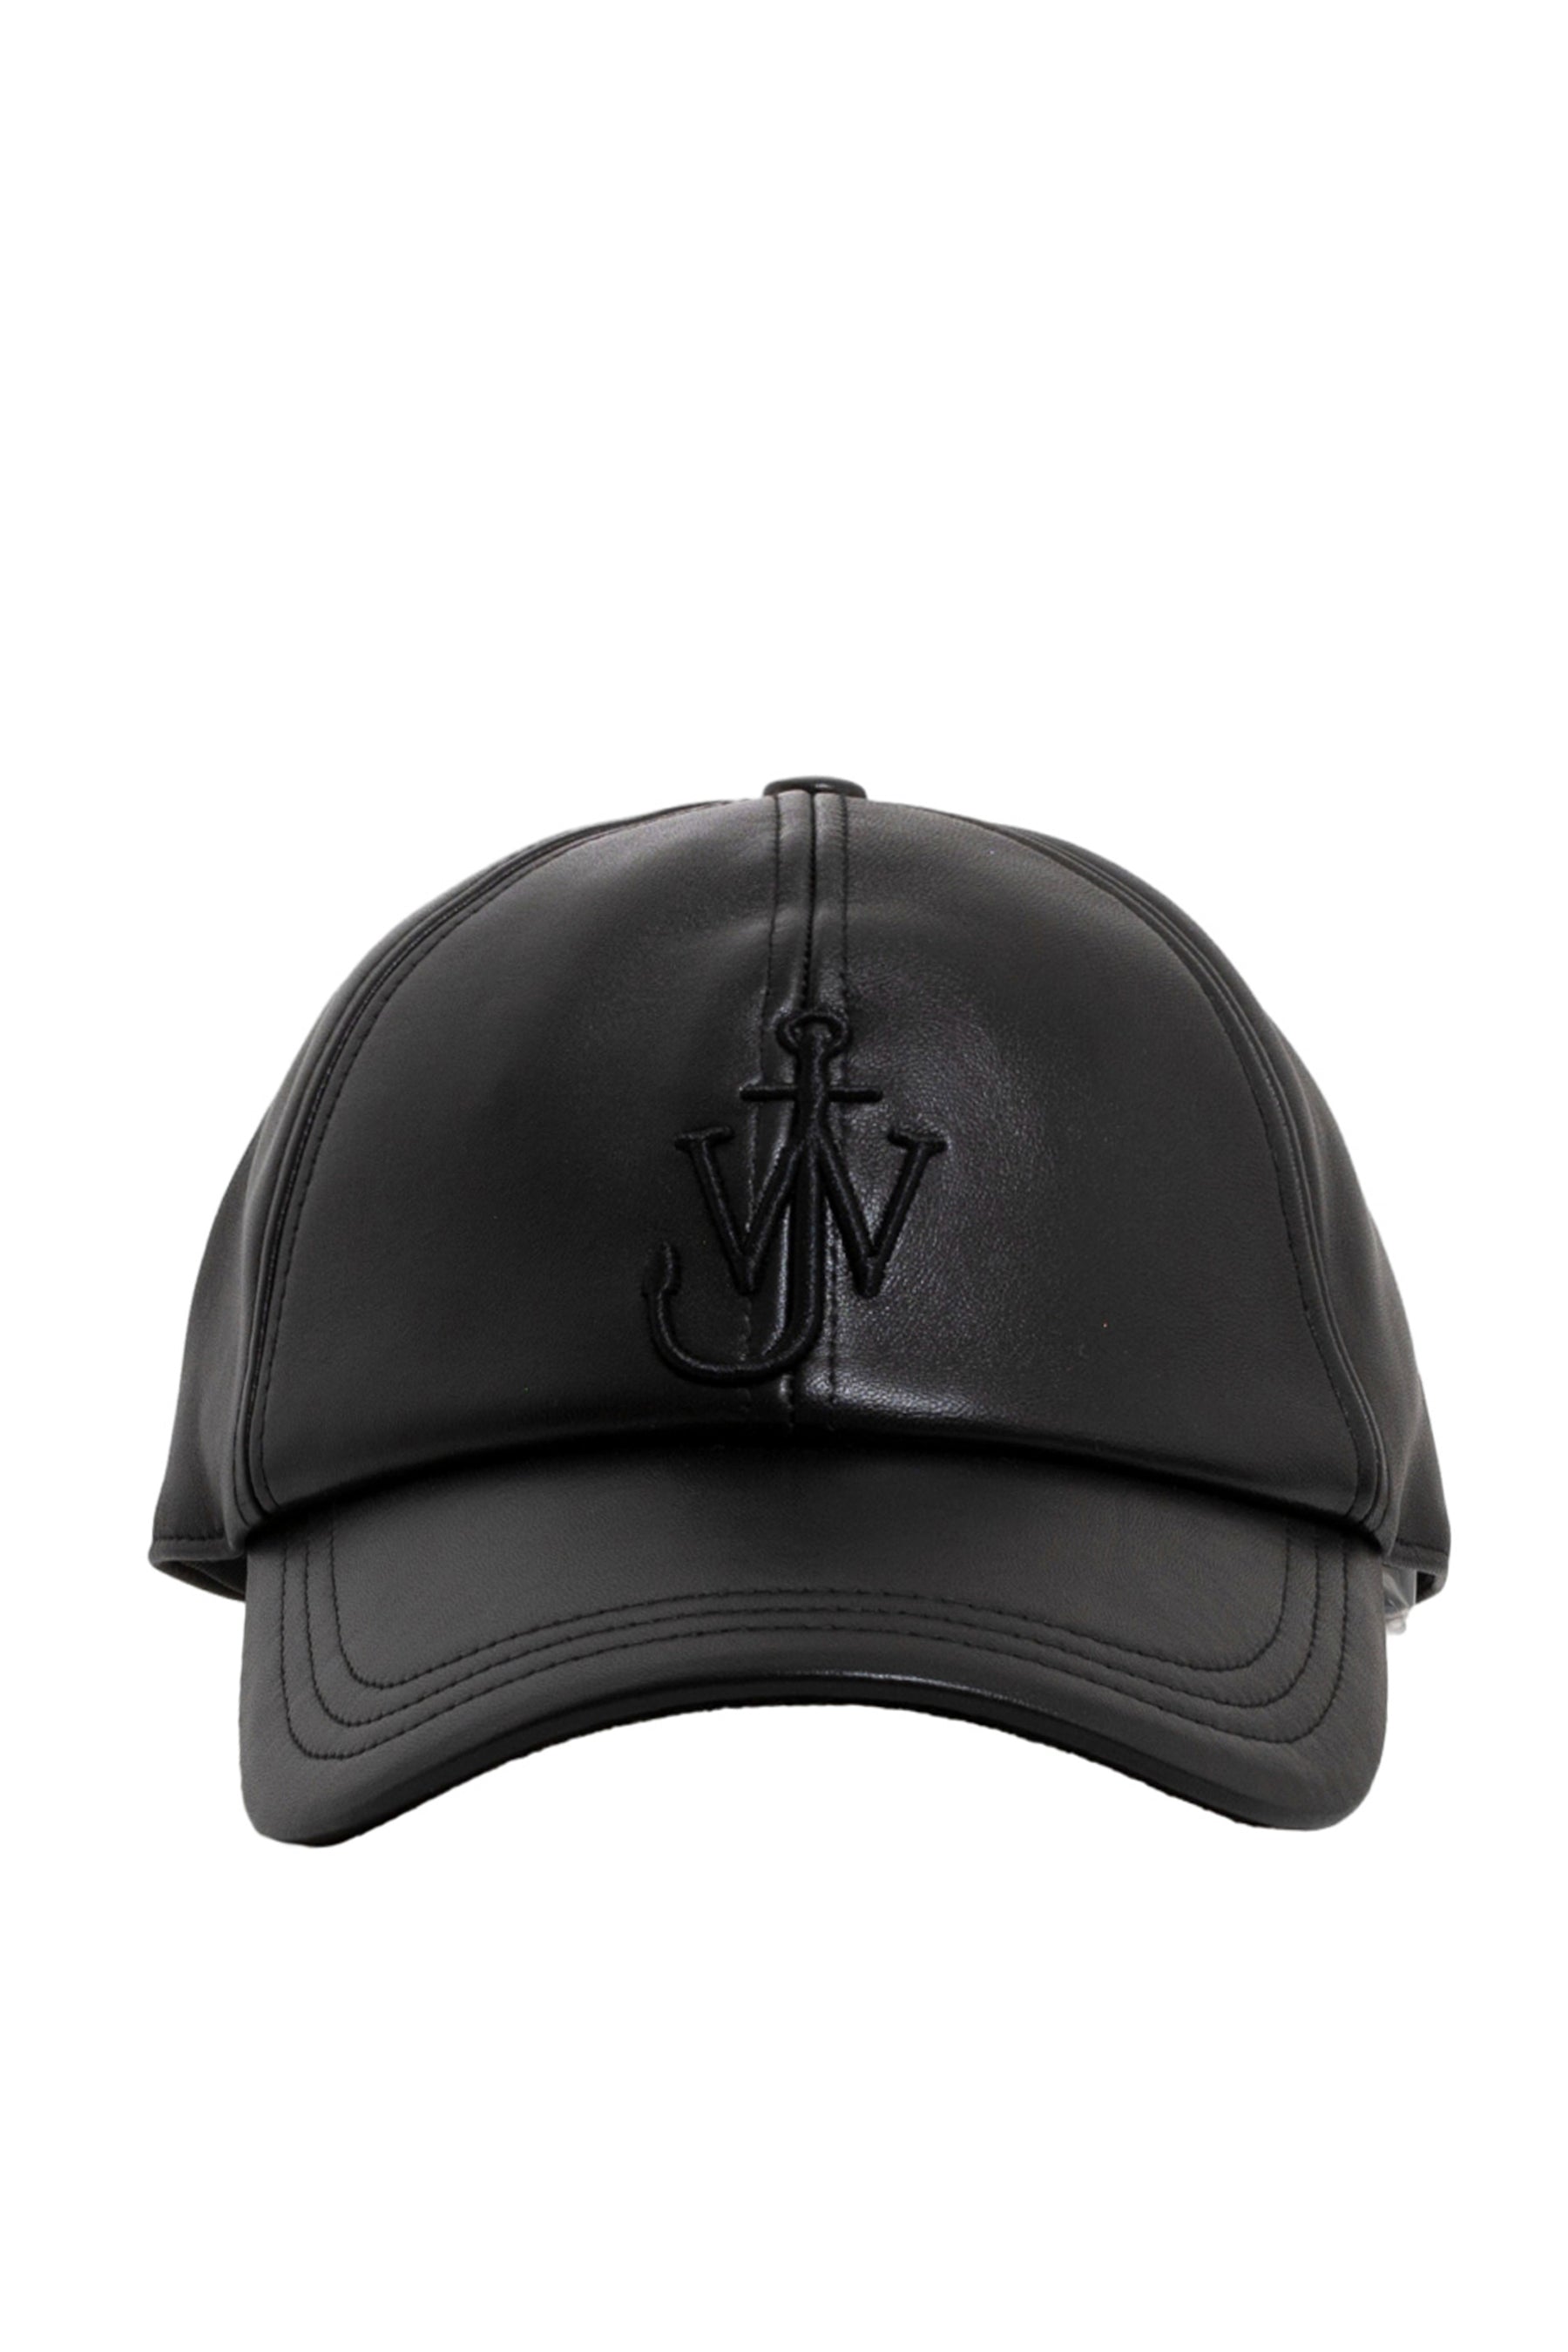 Logo embroidery leather baseball cap - JW Anderson - Men